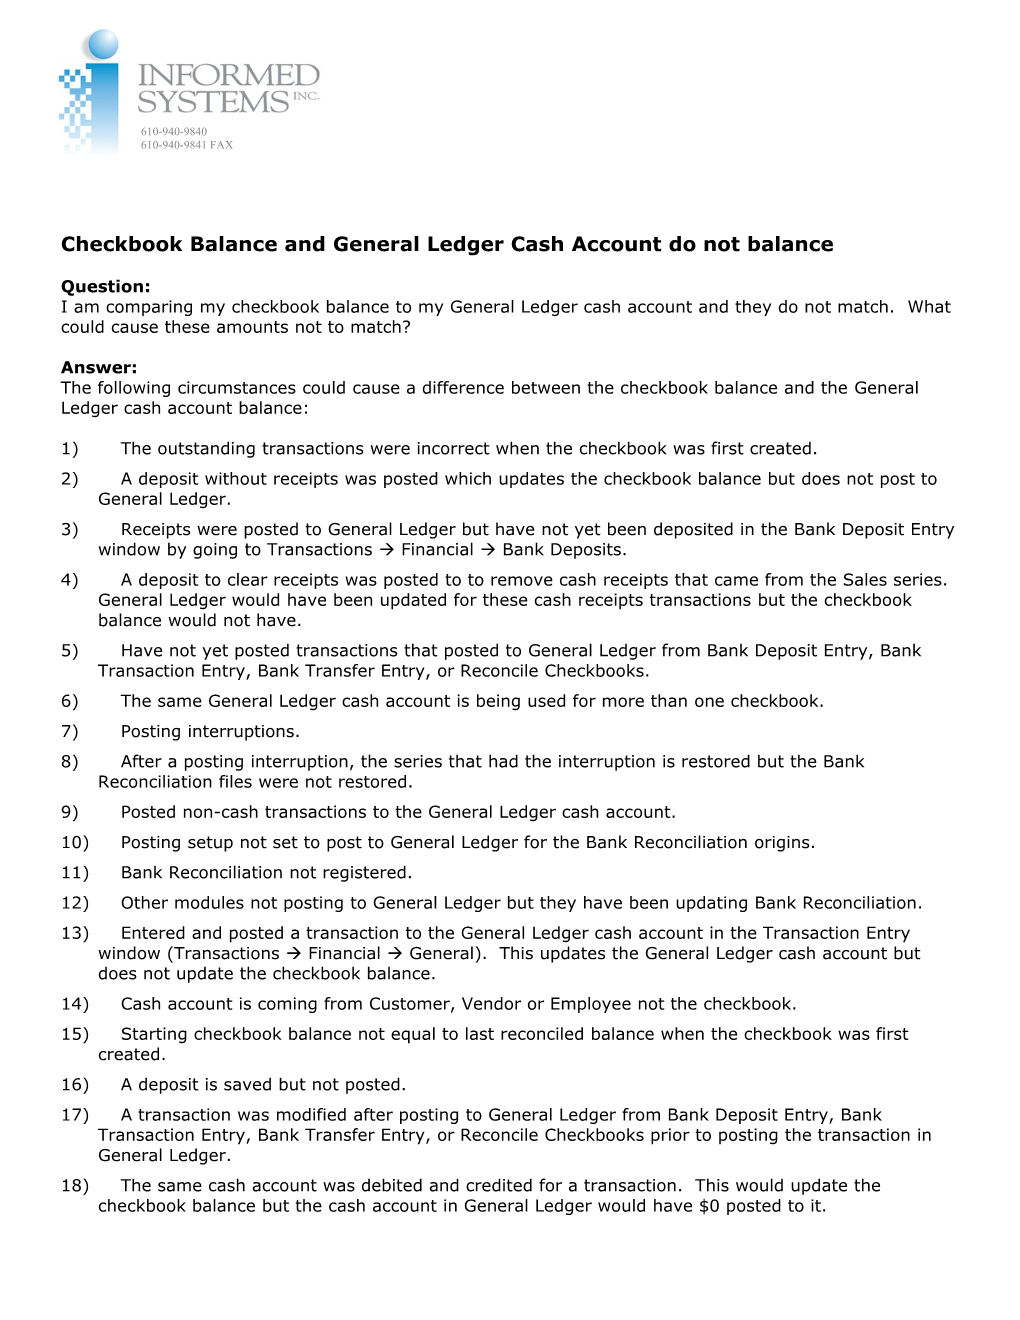 Checkbook Balance and General Ledger Cash Account Do Not Balance